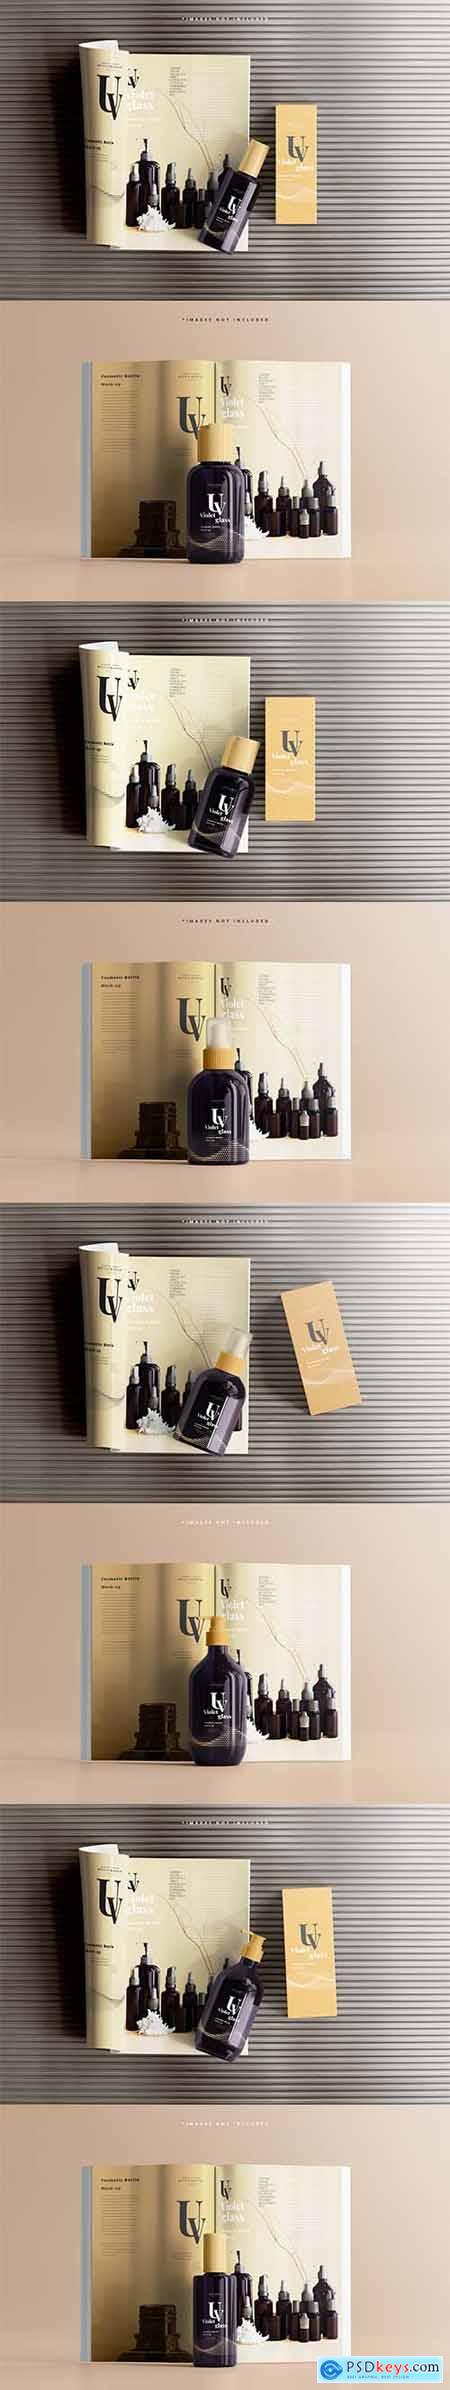 Uv glass cosmetic bottle with magazine mockup